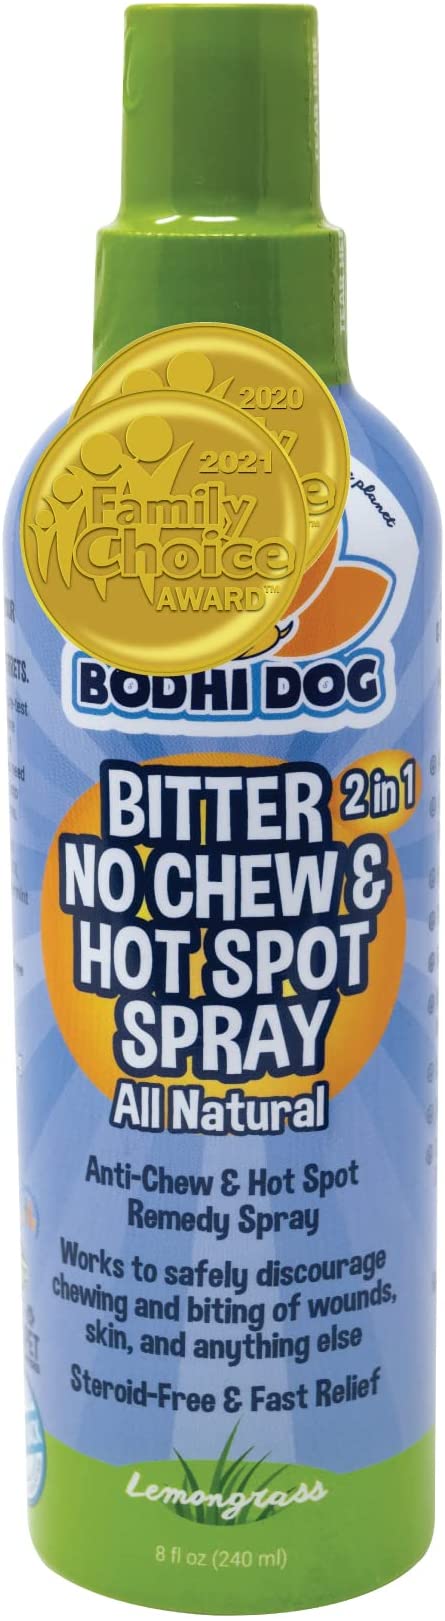 Bodhi Dog New Bitter 2 in 1 No Chew & Hot Spot Spray | All Natural Anti-Chew Remedy